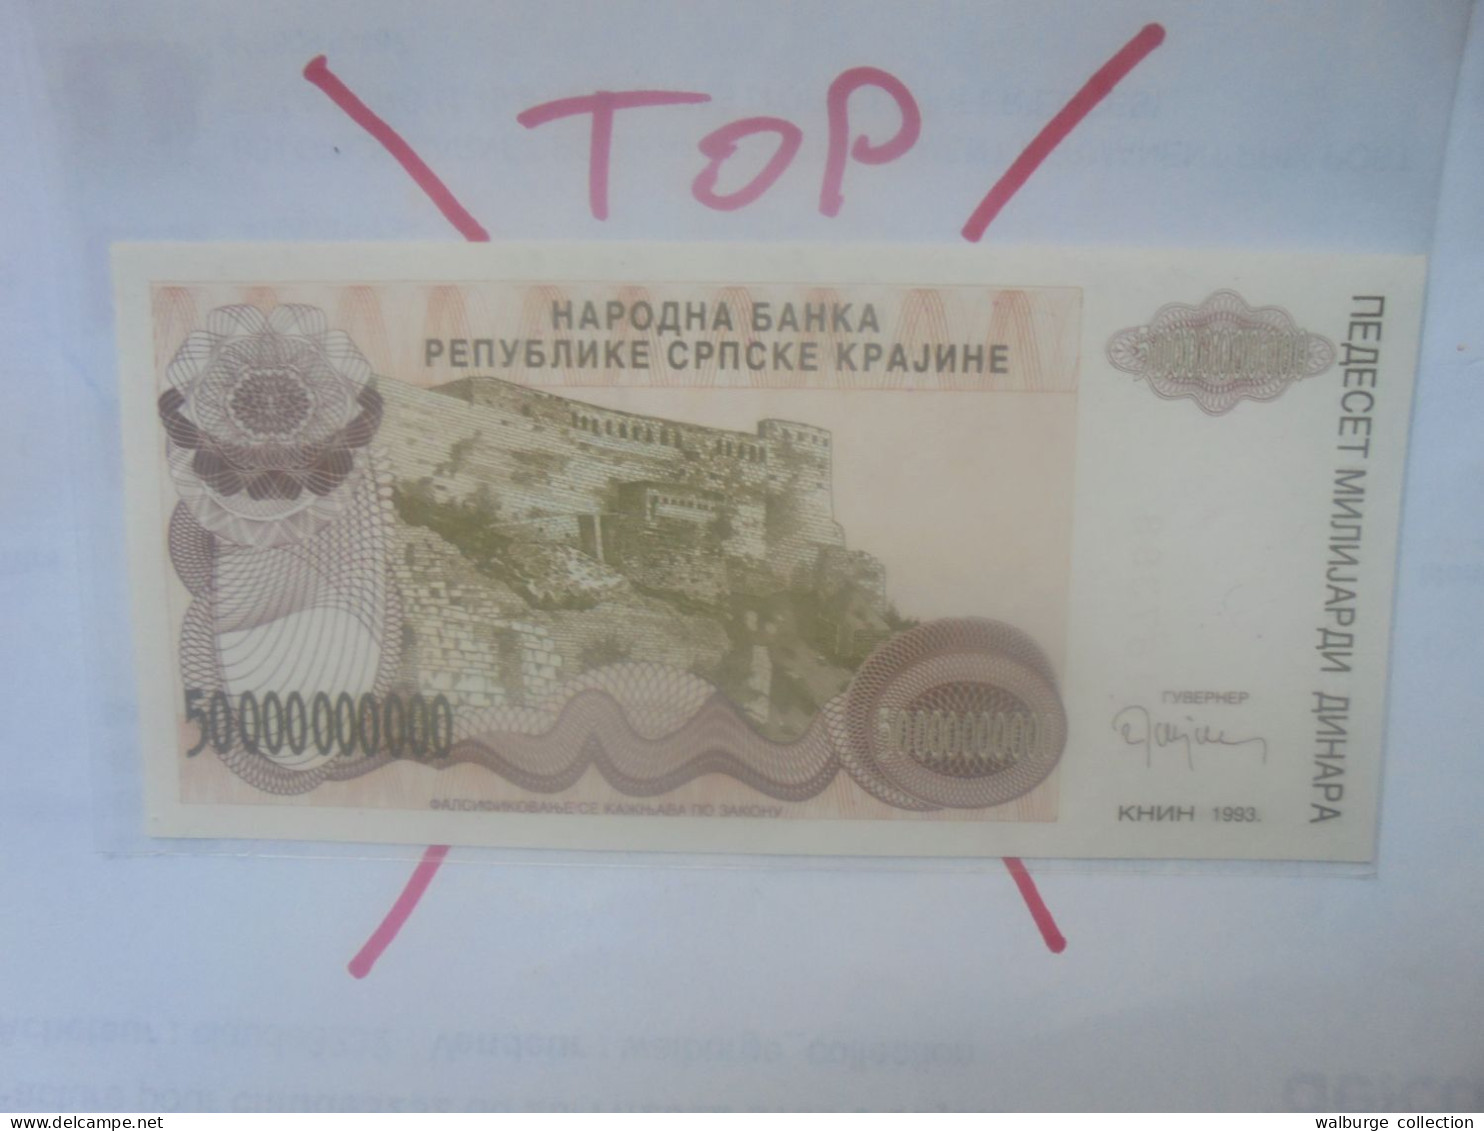 République Serbe (KNIN) 50.000.000.000 DINARA 1993 Neuf (B.30) - Serbia